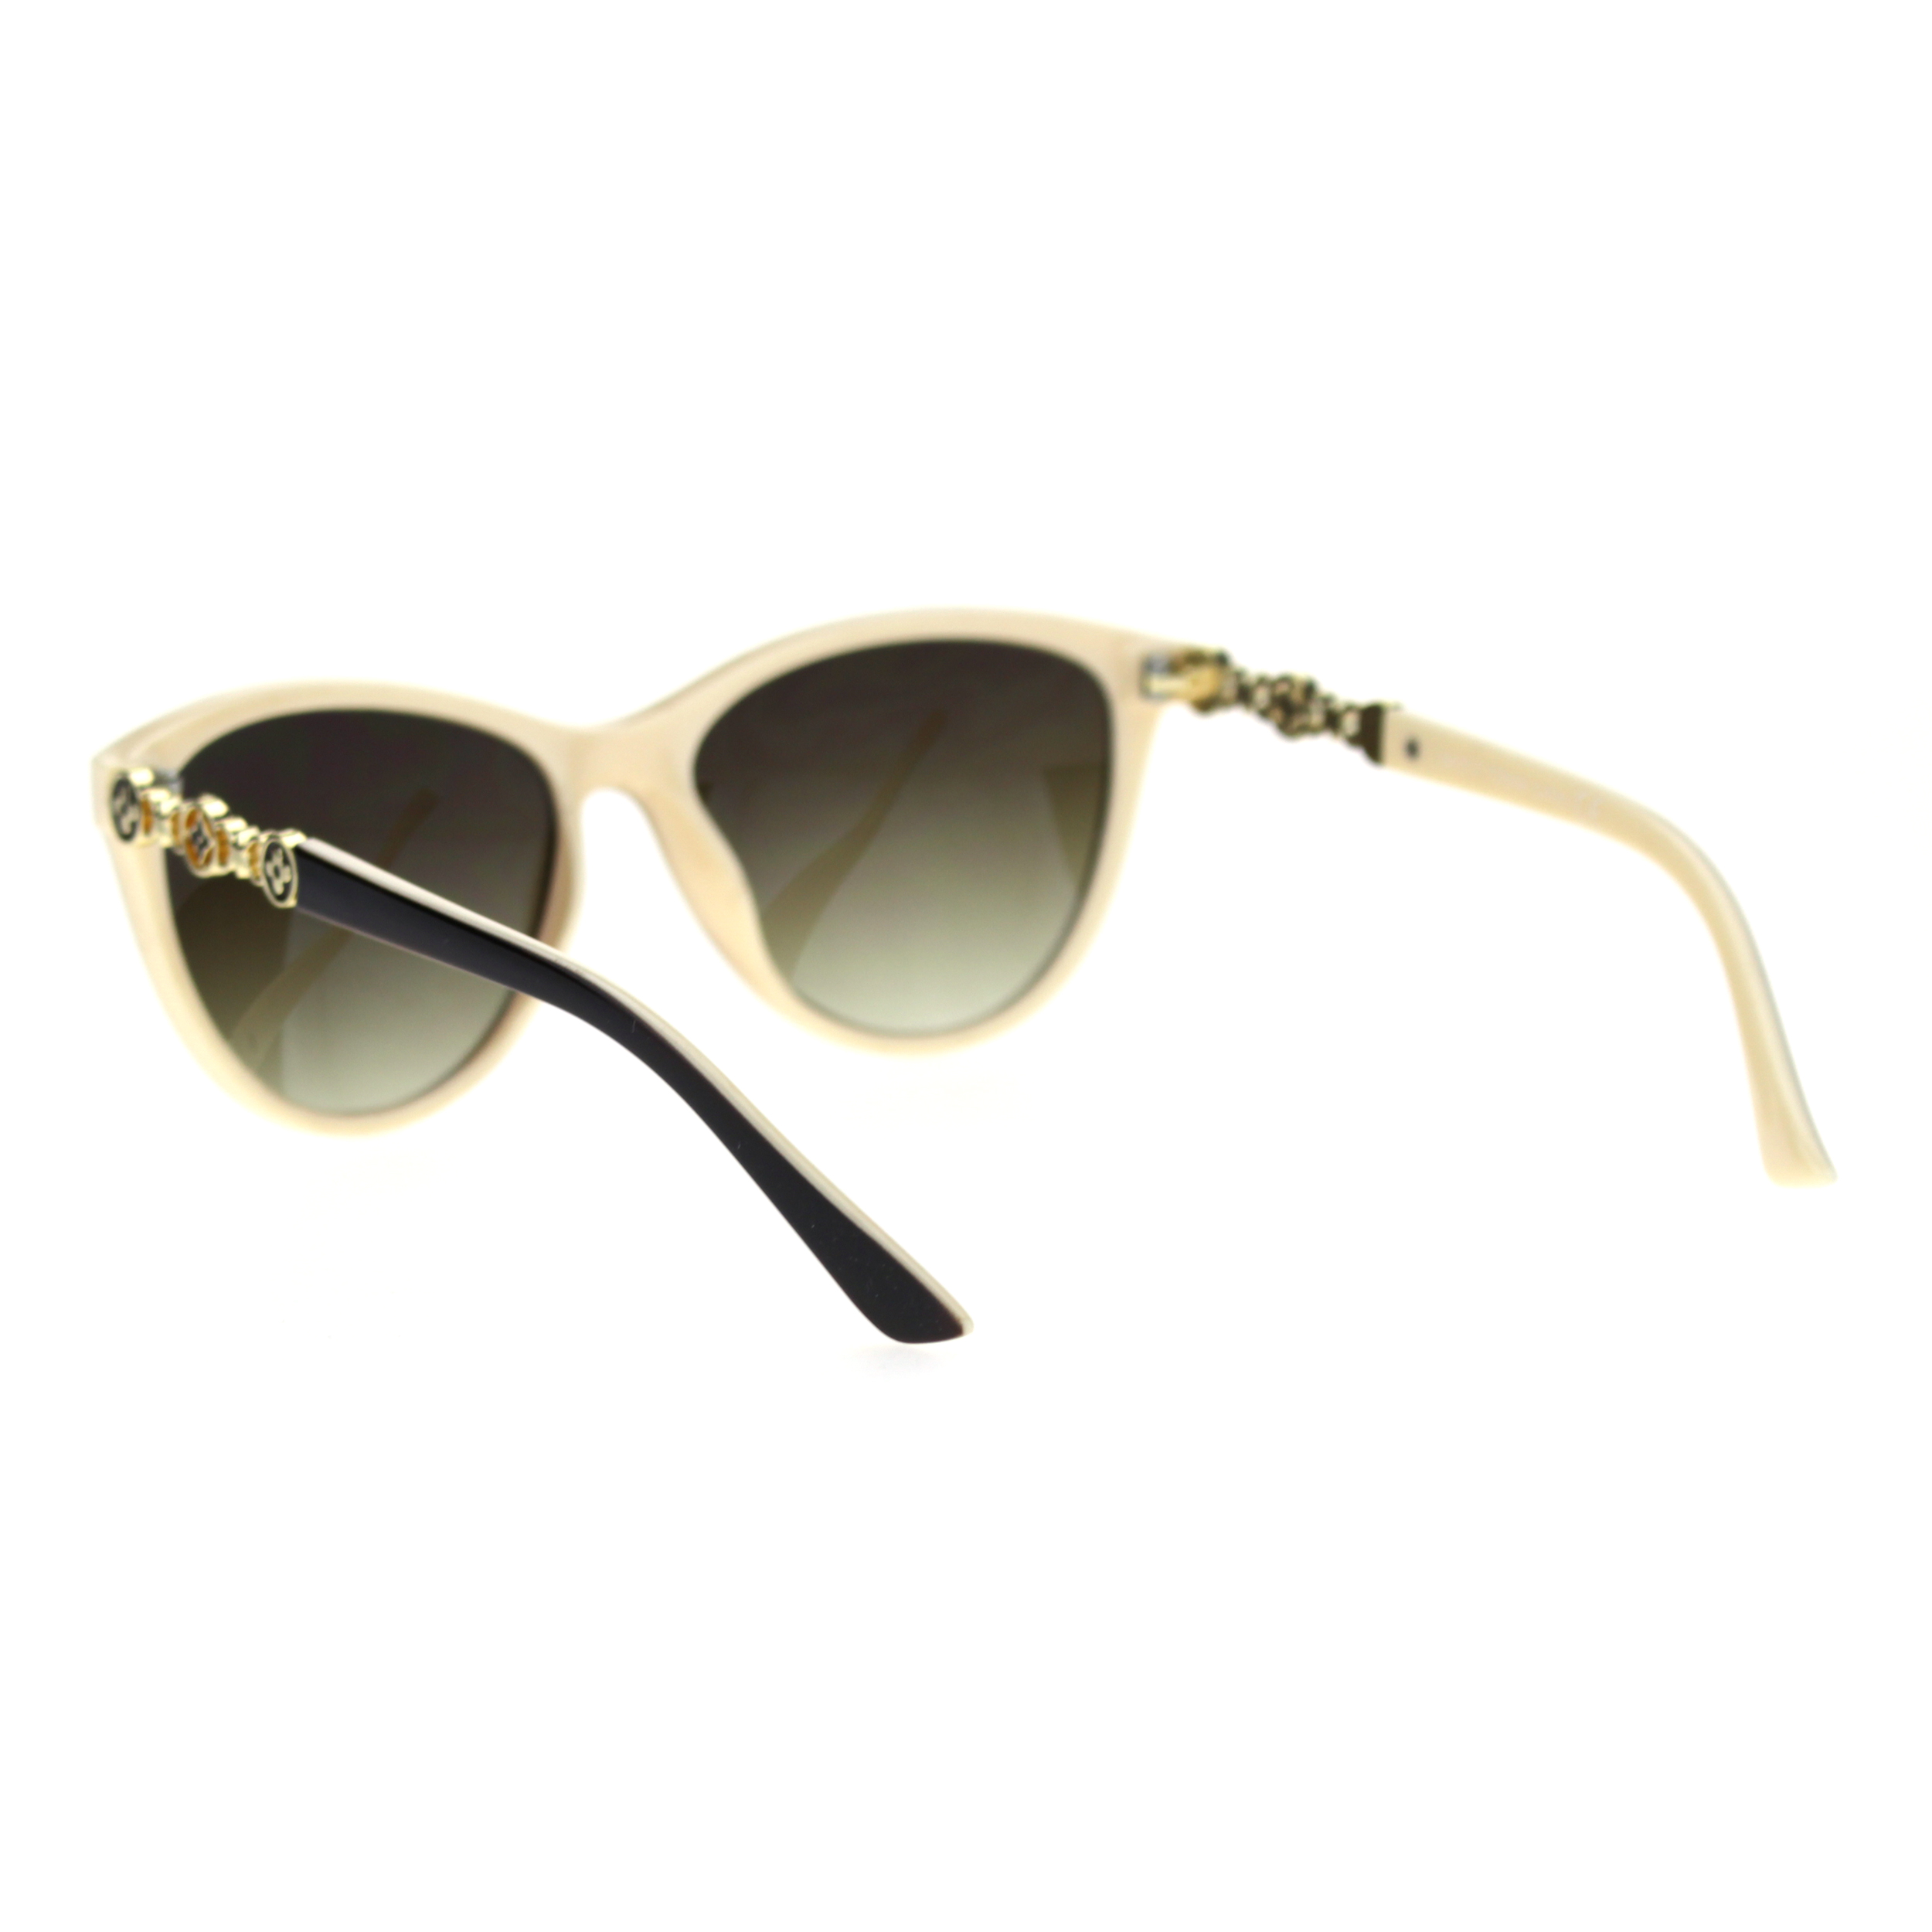 Womens Luxury Designer Fashion Cat Eye Chic Sunglasses Brown Beige Brown - image 4 of 4